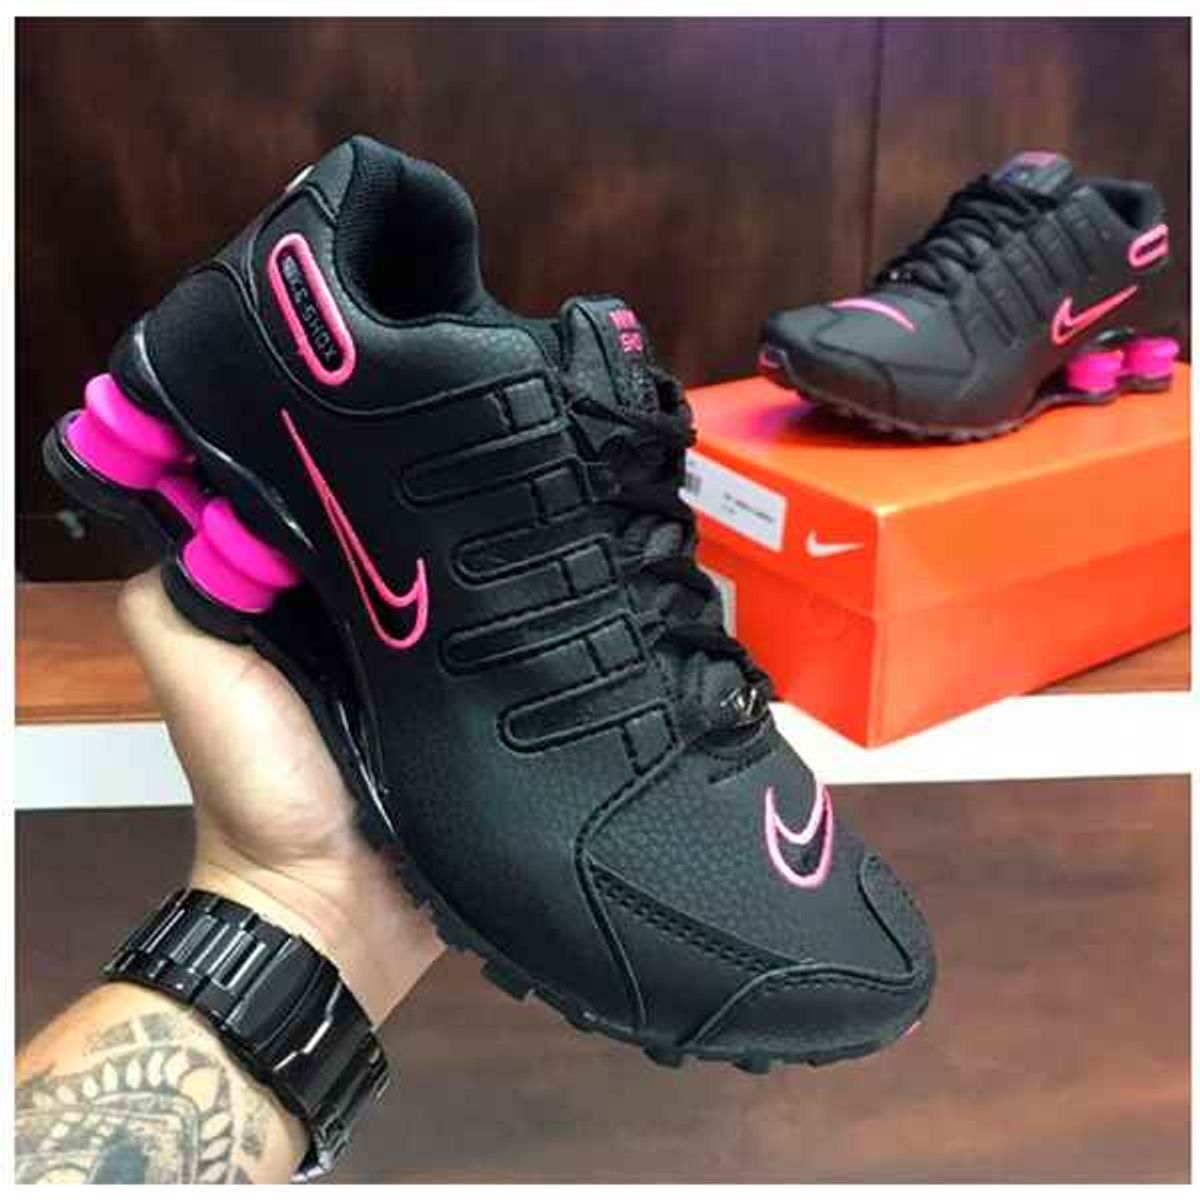 Tenis Nike Shox Nz Feminino Preto Pink Nike 4 Molas Original a Pronta Entrega 38 Tênis Feminino Nike Nunca Usado 47218042 | enjoei